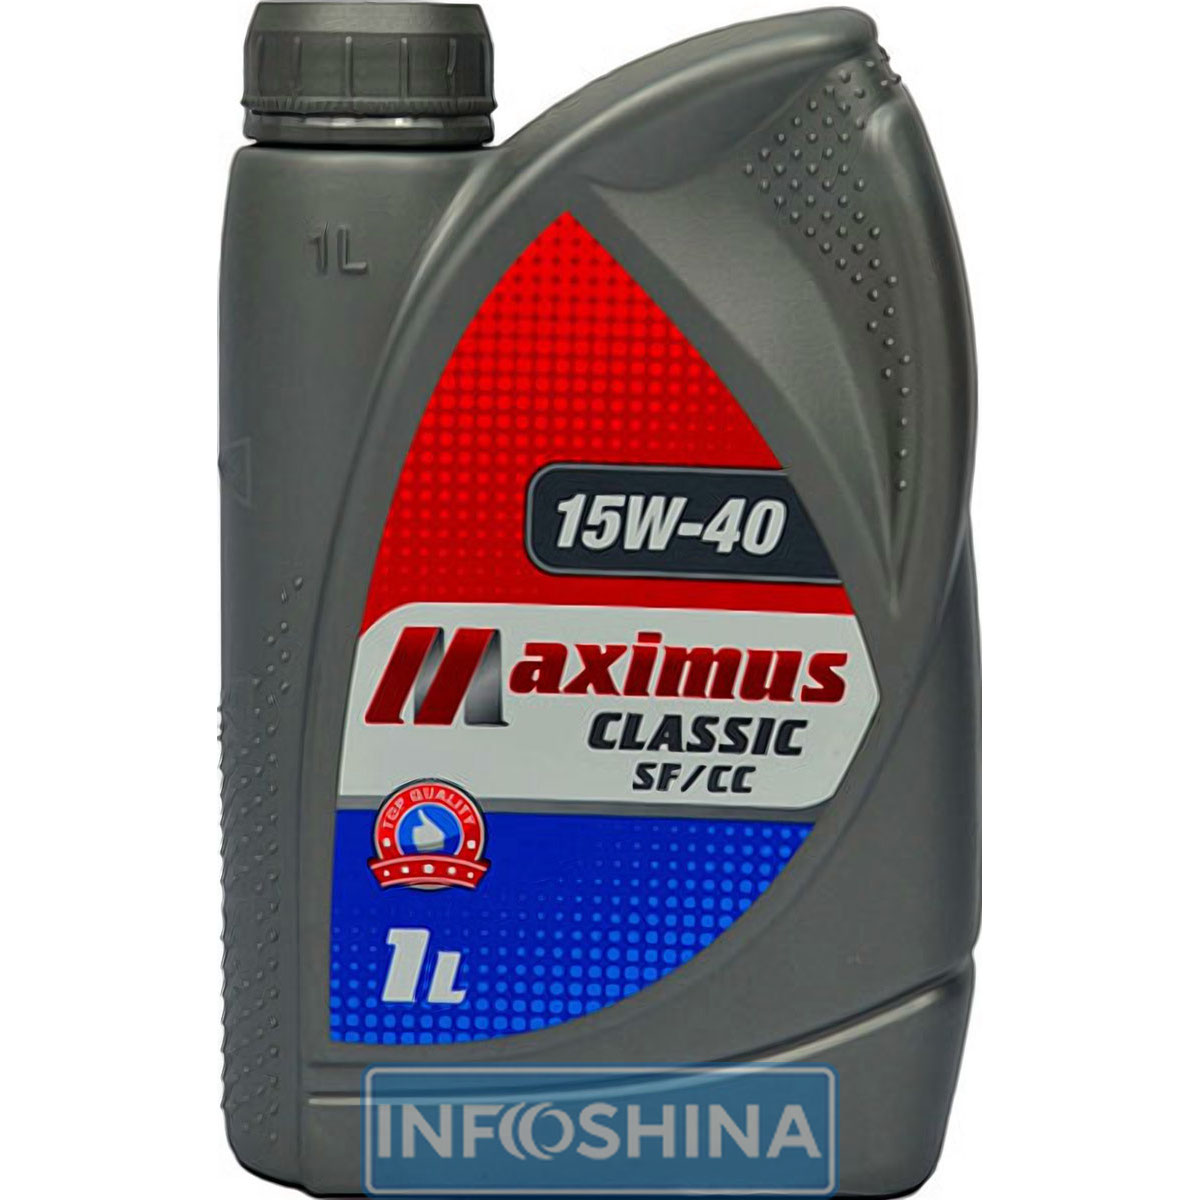 Купить масло Maximus Classic SF/CC 15W-40 (1л)